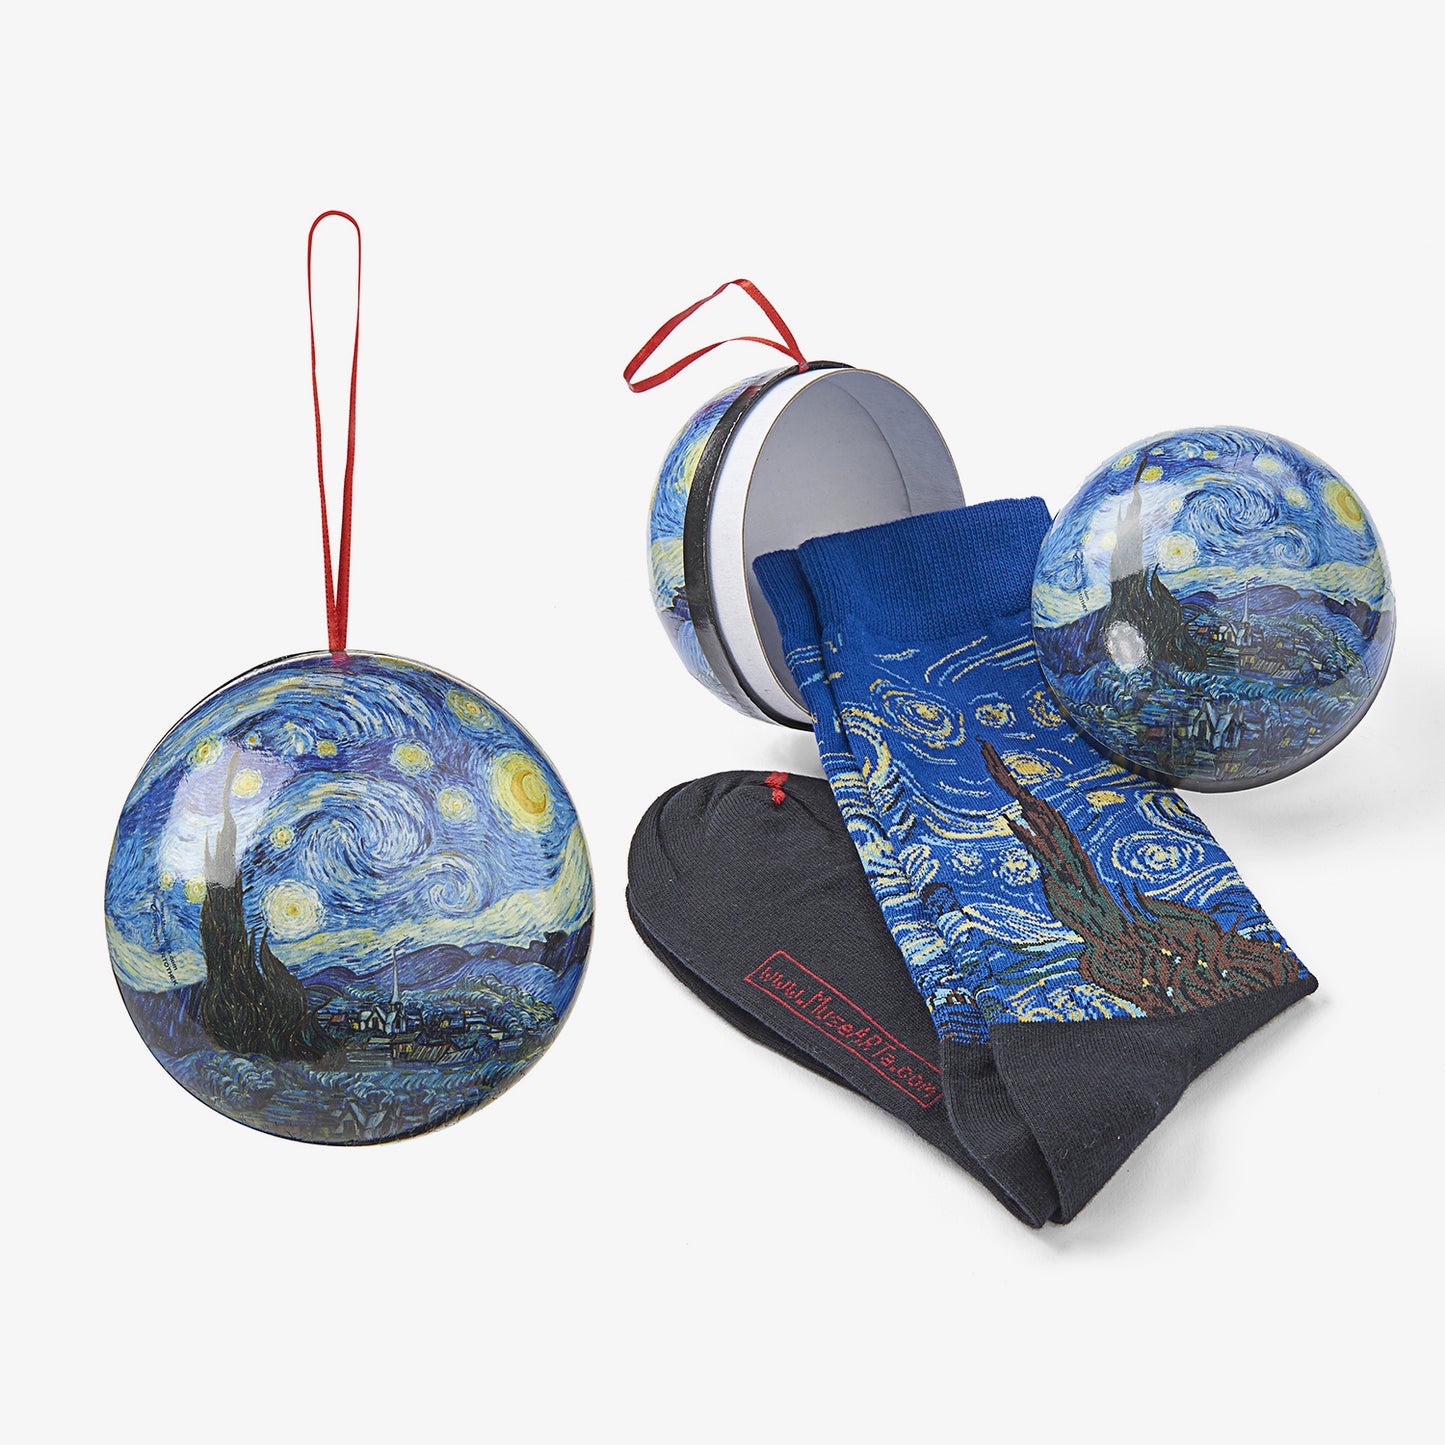 Gift ball - Vincent van Gogh, Starry Night